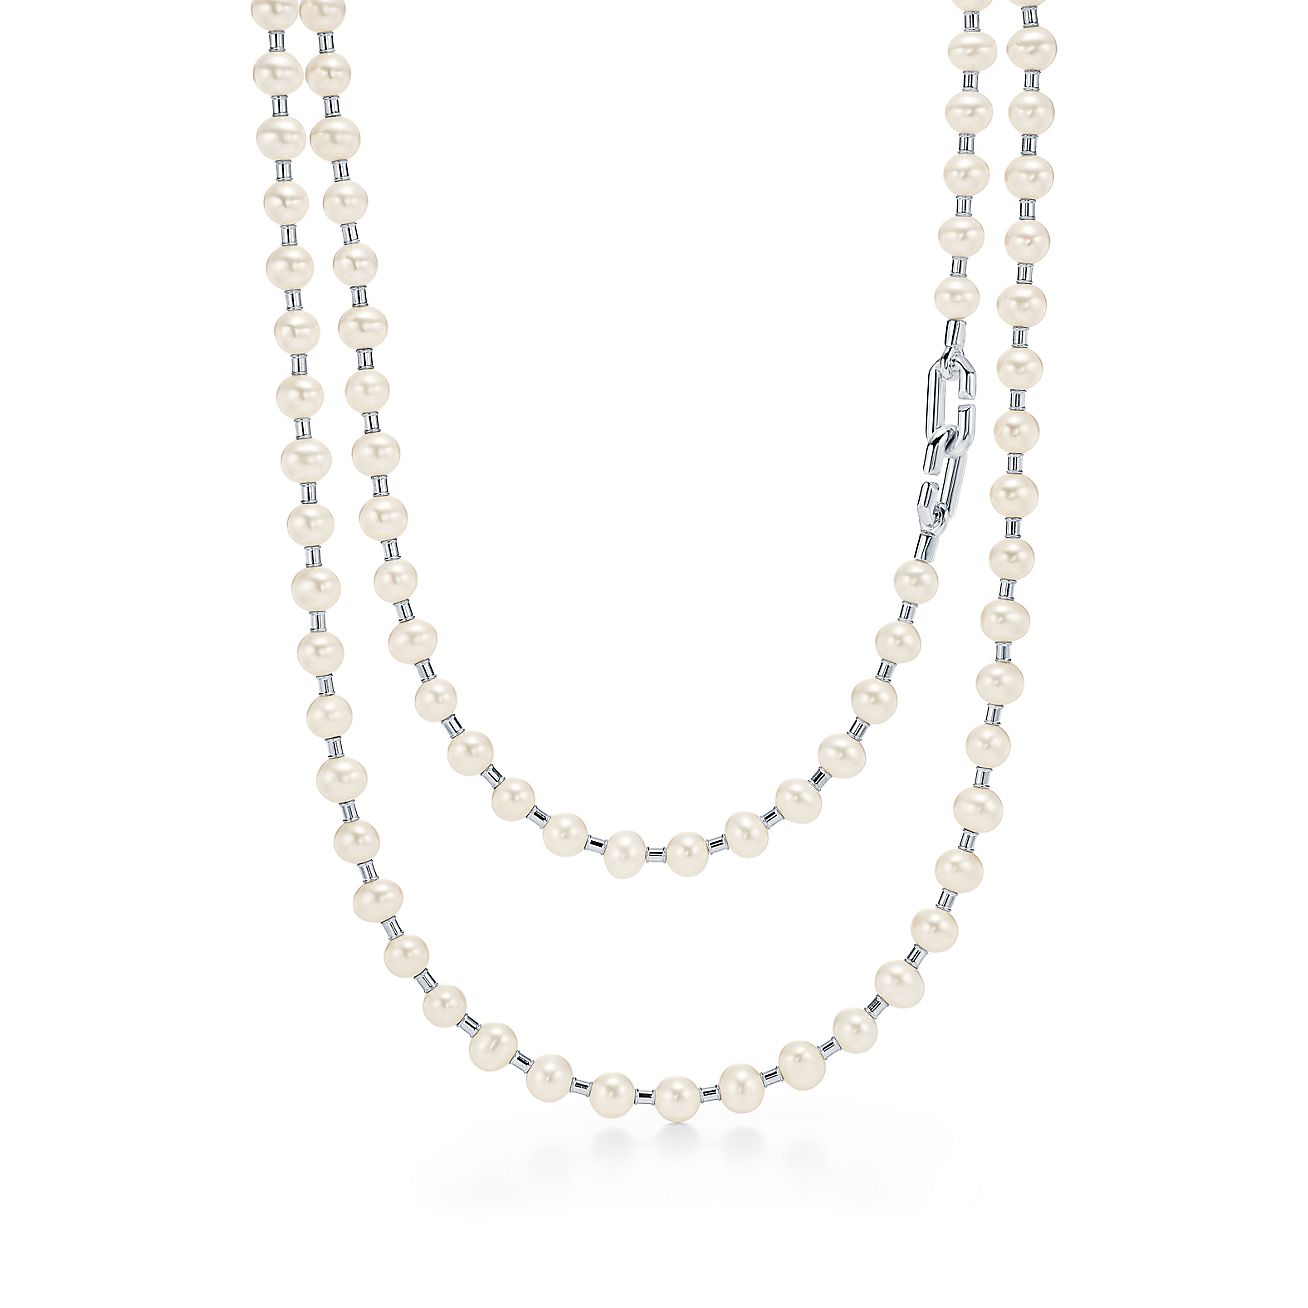 tiffany black pearl necklace